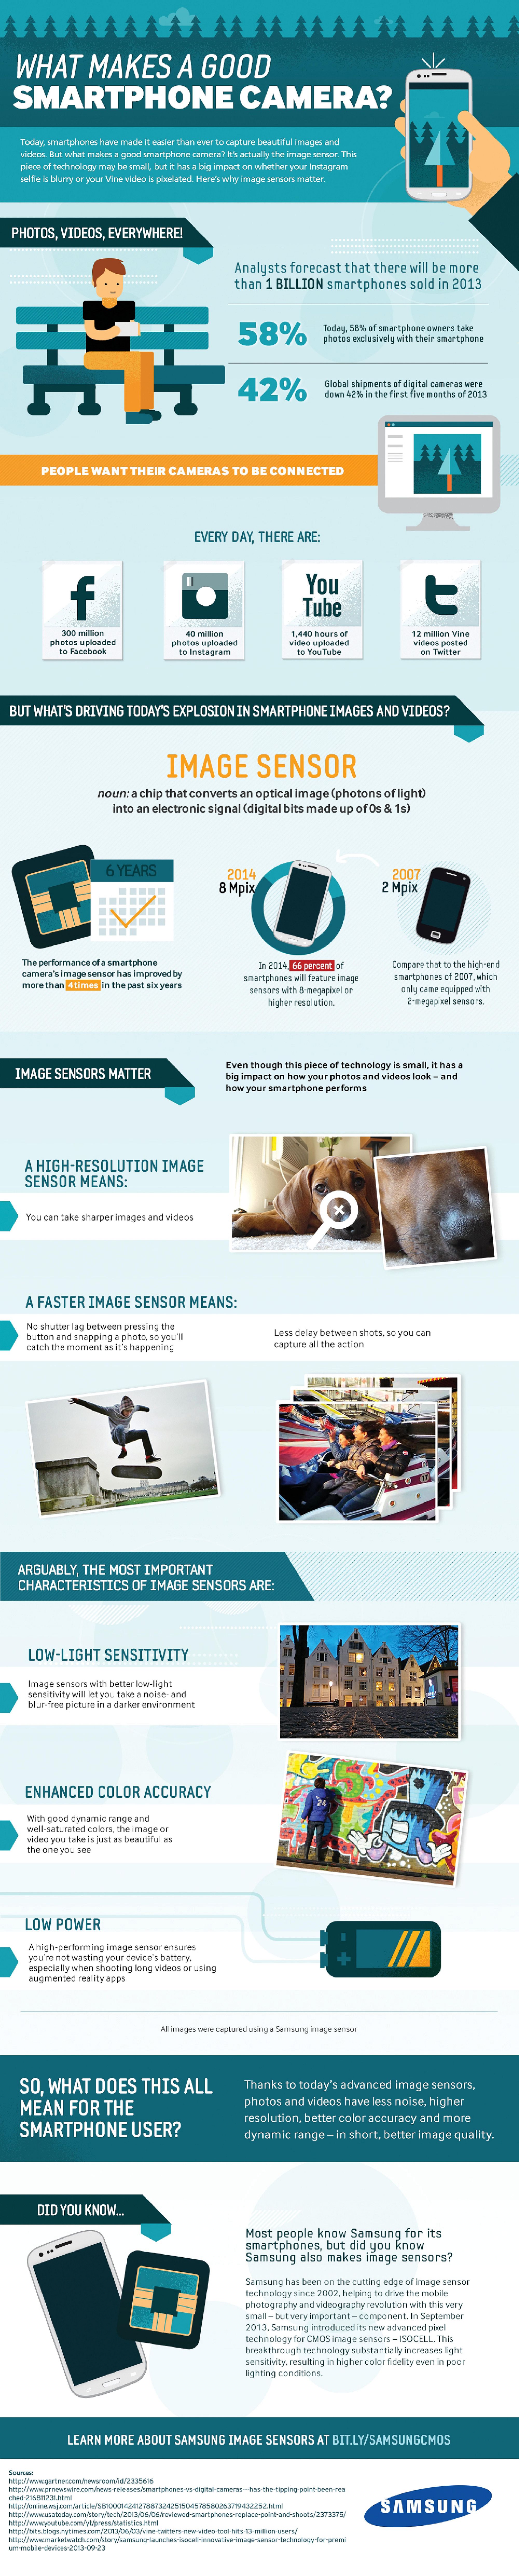 Samsung-tomorrow-infographic-on-smartphone-camera-image-sensors1-2